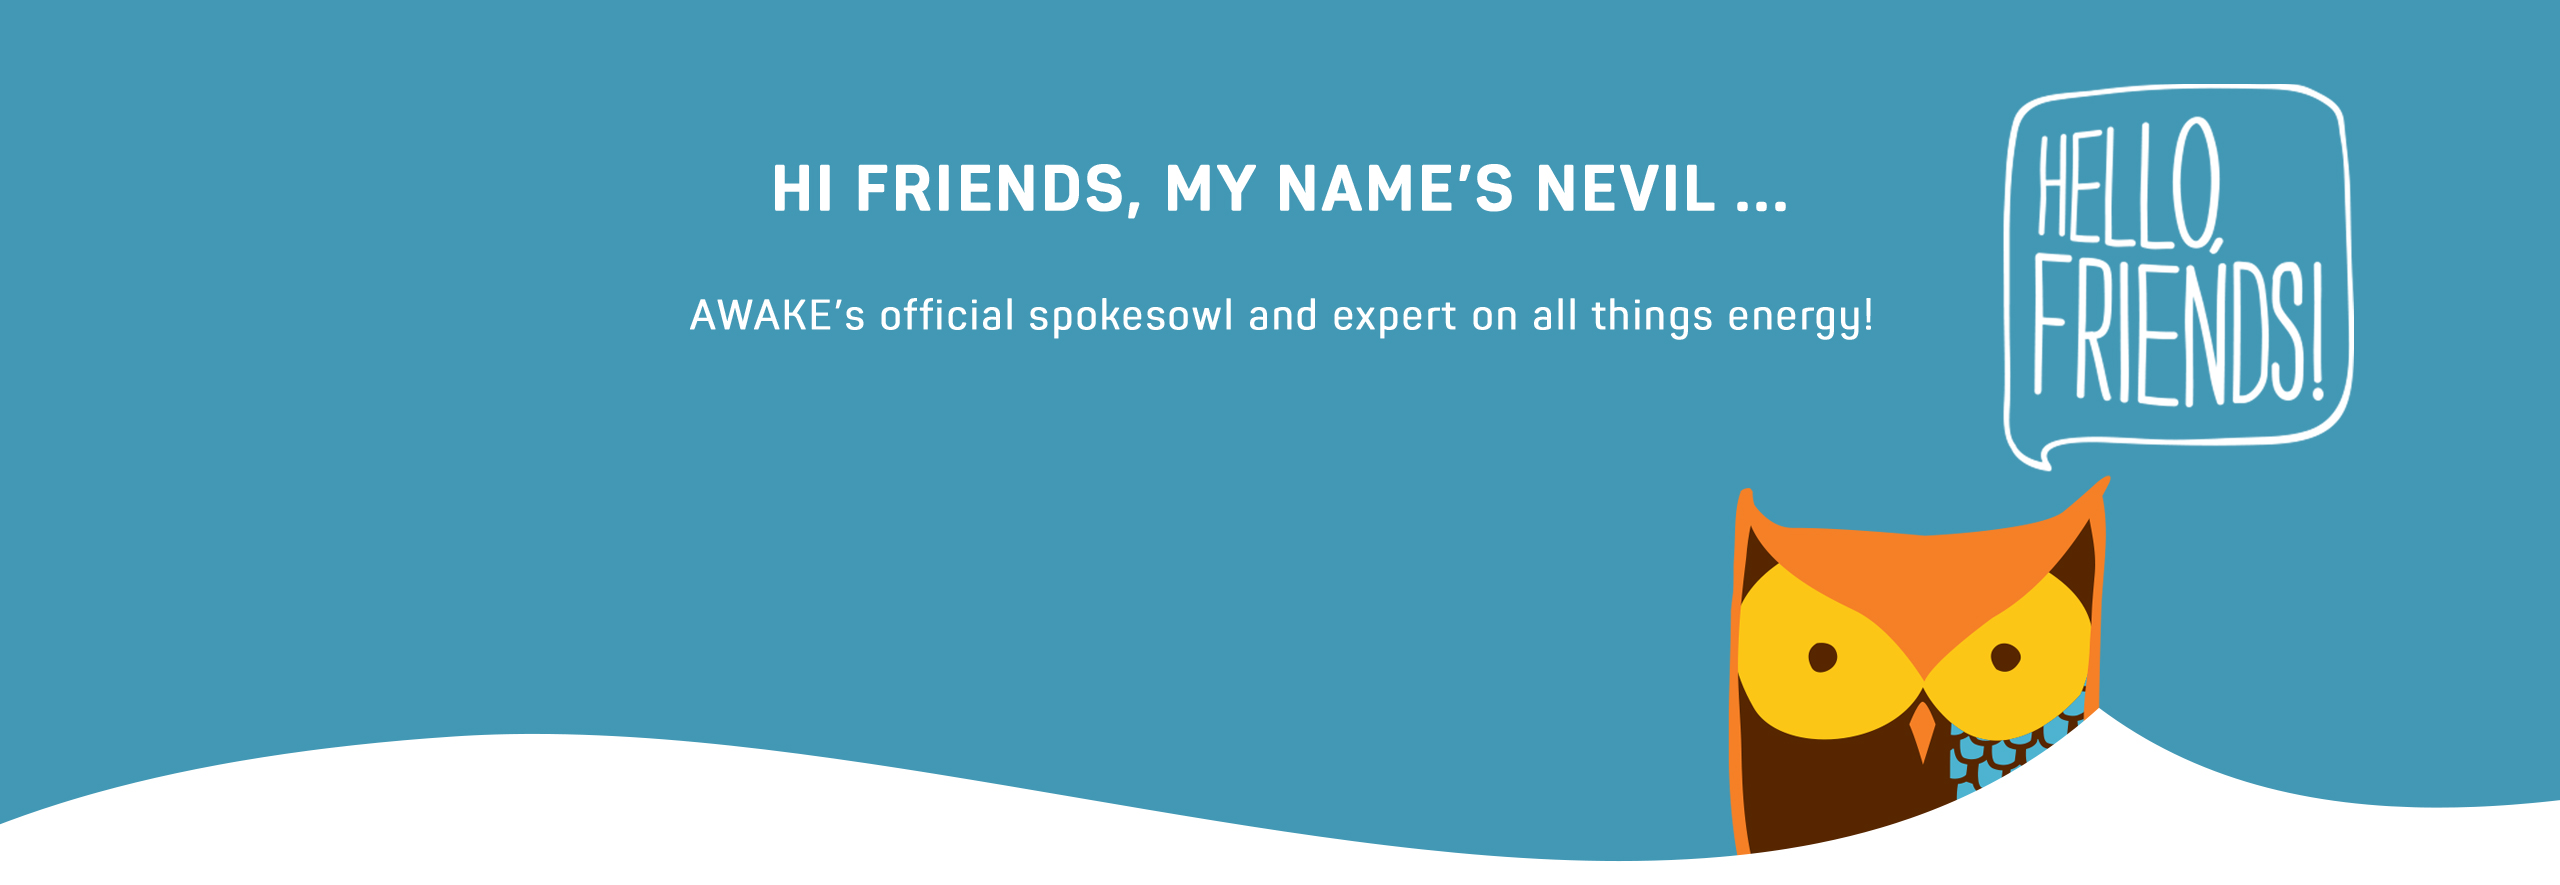 Cartoon image of Nevil, Awake's mascot, an owl. 'Hello friends, my name's Nevil, Awake's official spokesowl and expert on all things energy.'